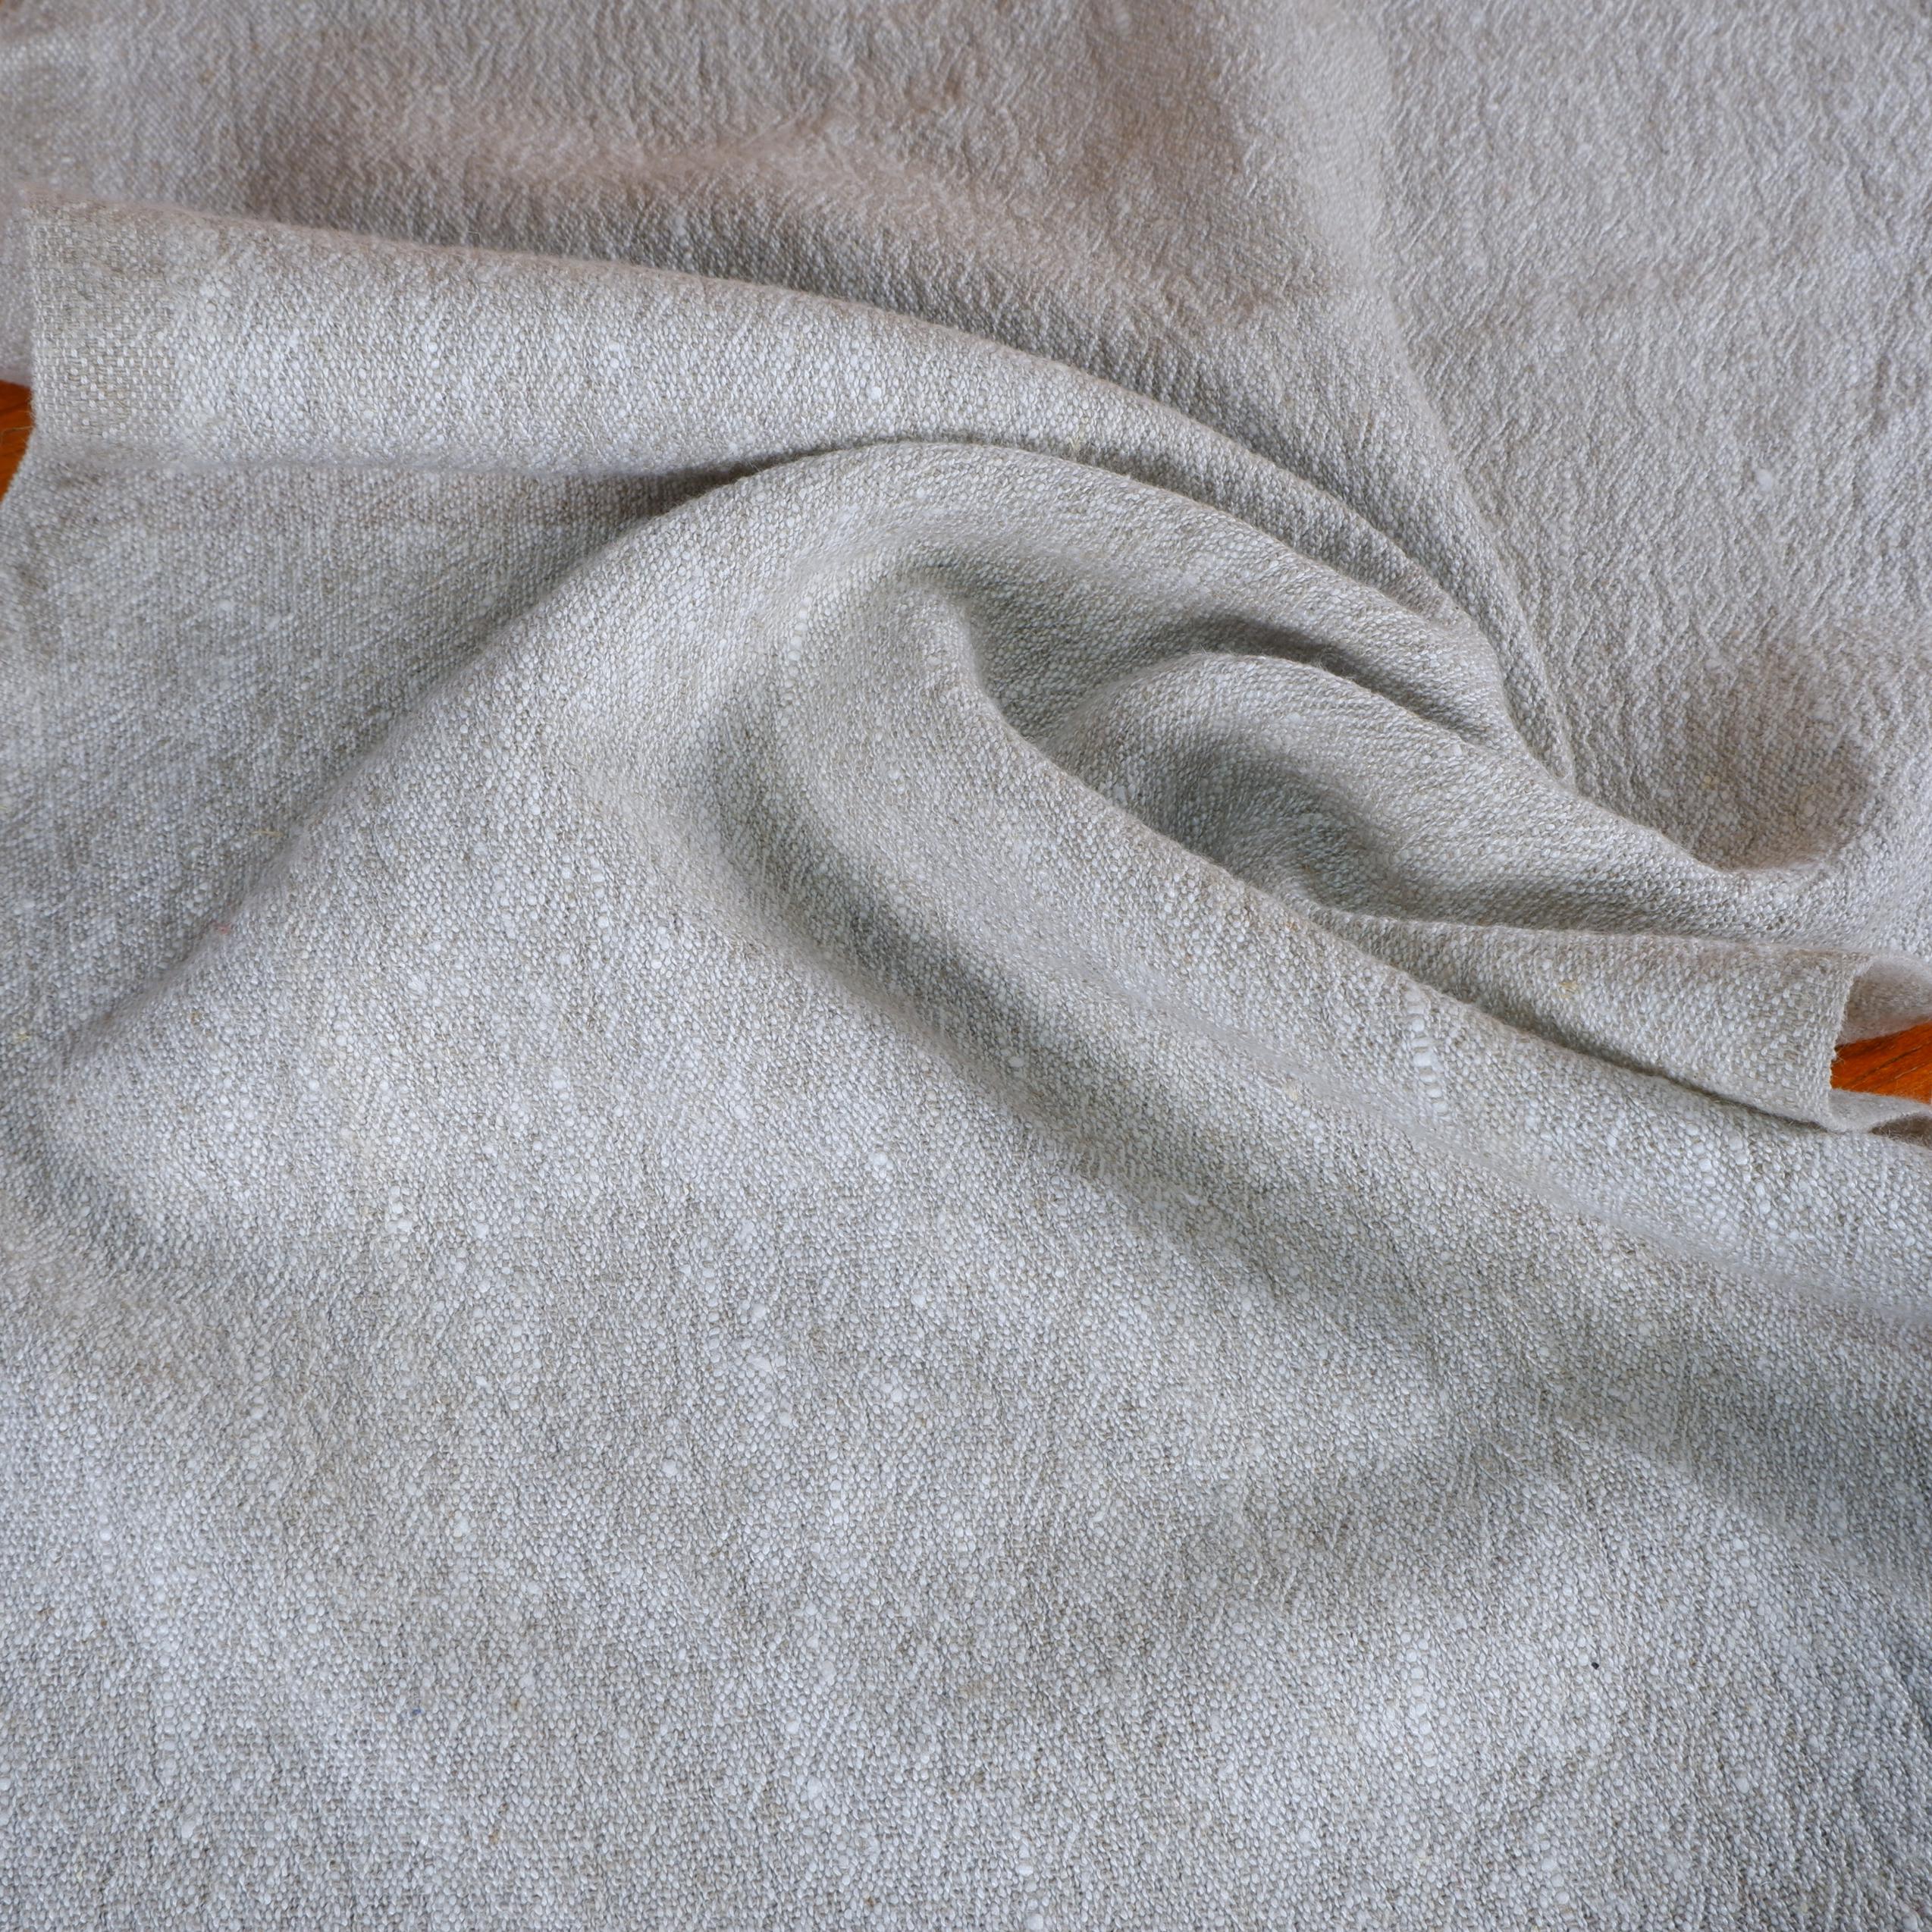 Natur - oatmeal - sack weave - linen fabric - 045A - LithuanianLinen